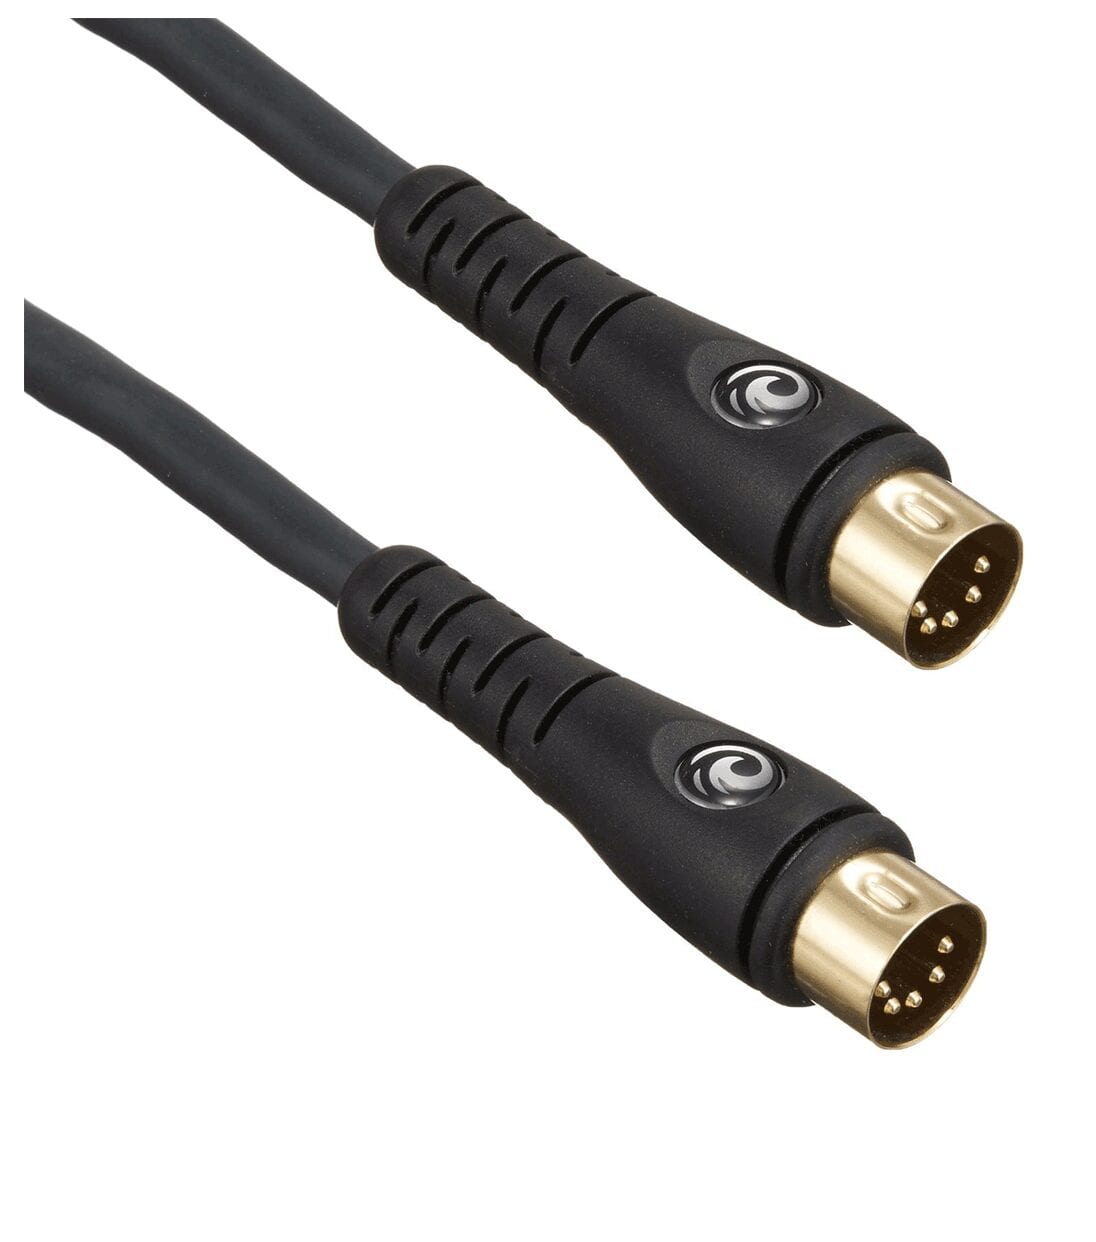 D'Addario Custom Series MIDI Cable, 10 ft